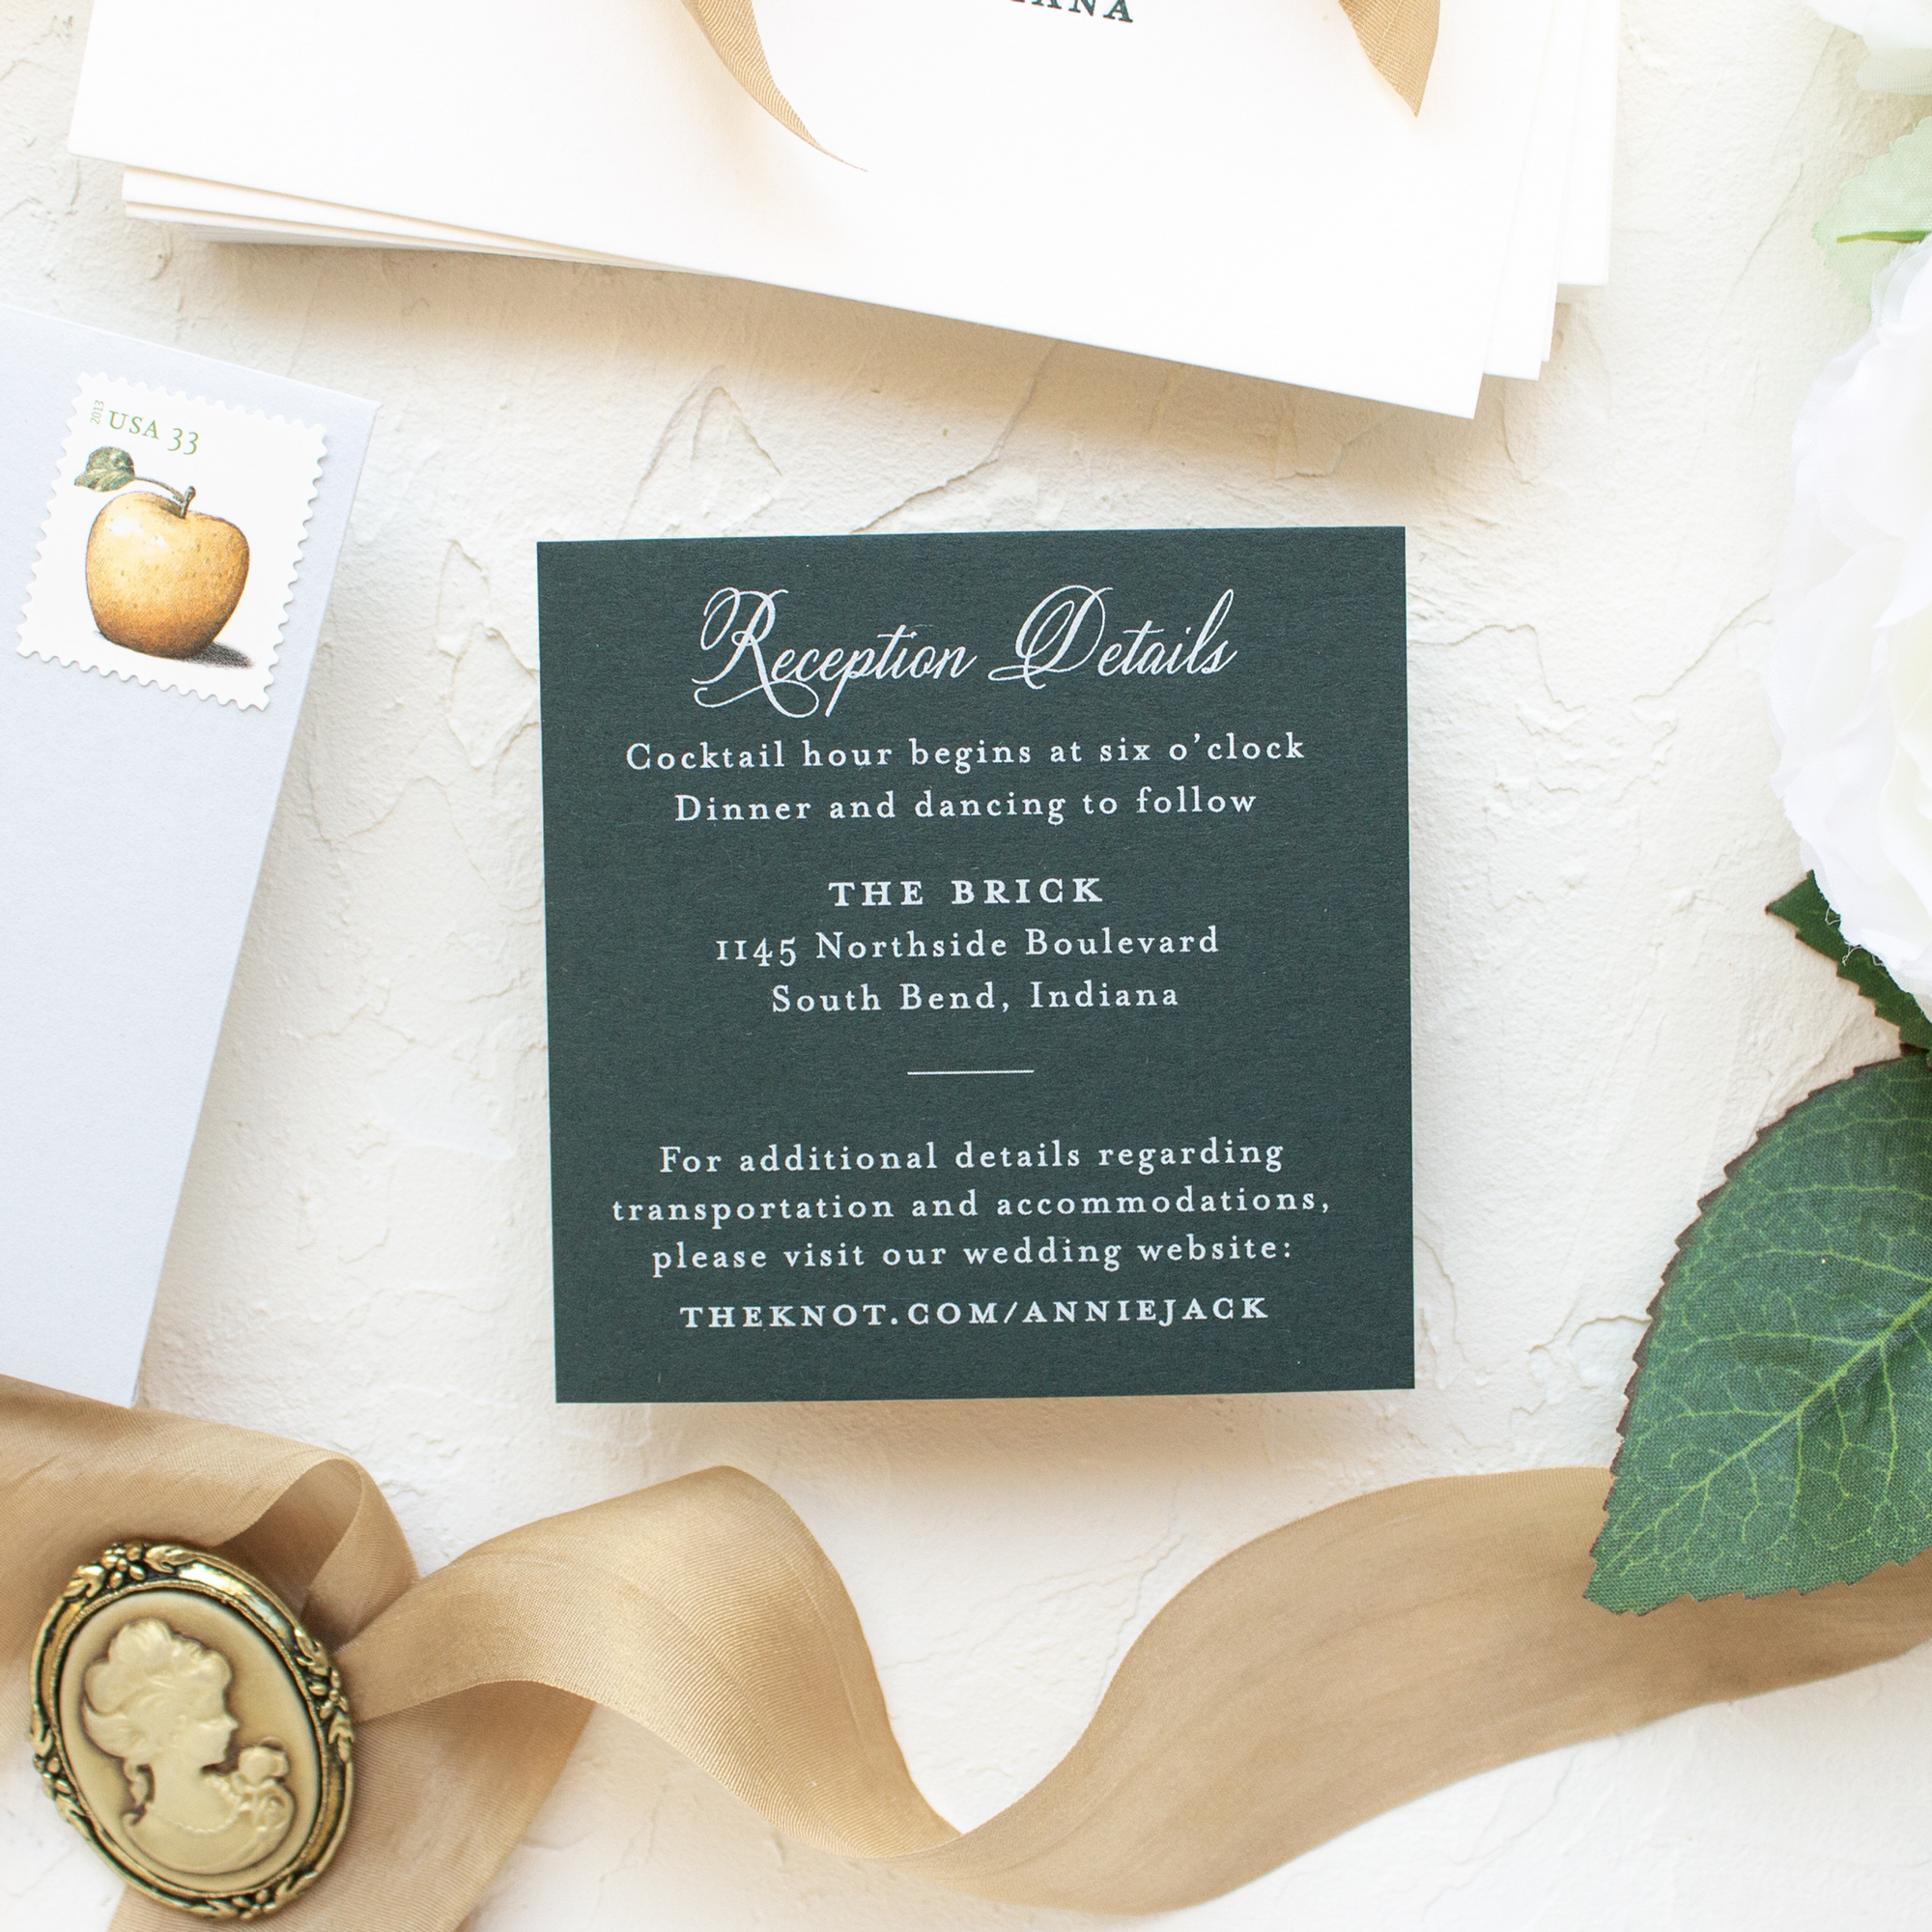 The Brick wedding reception cards